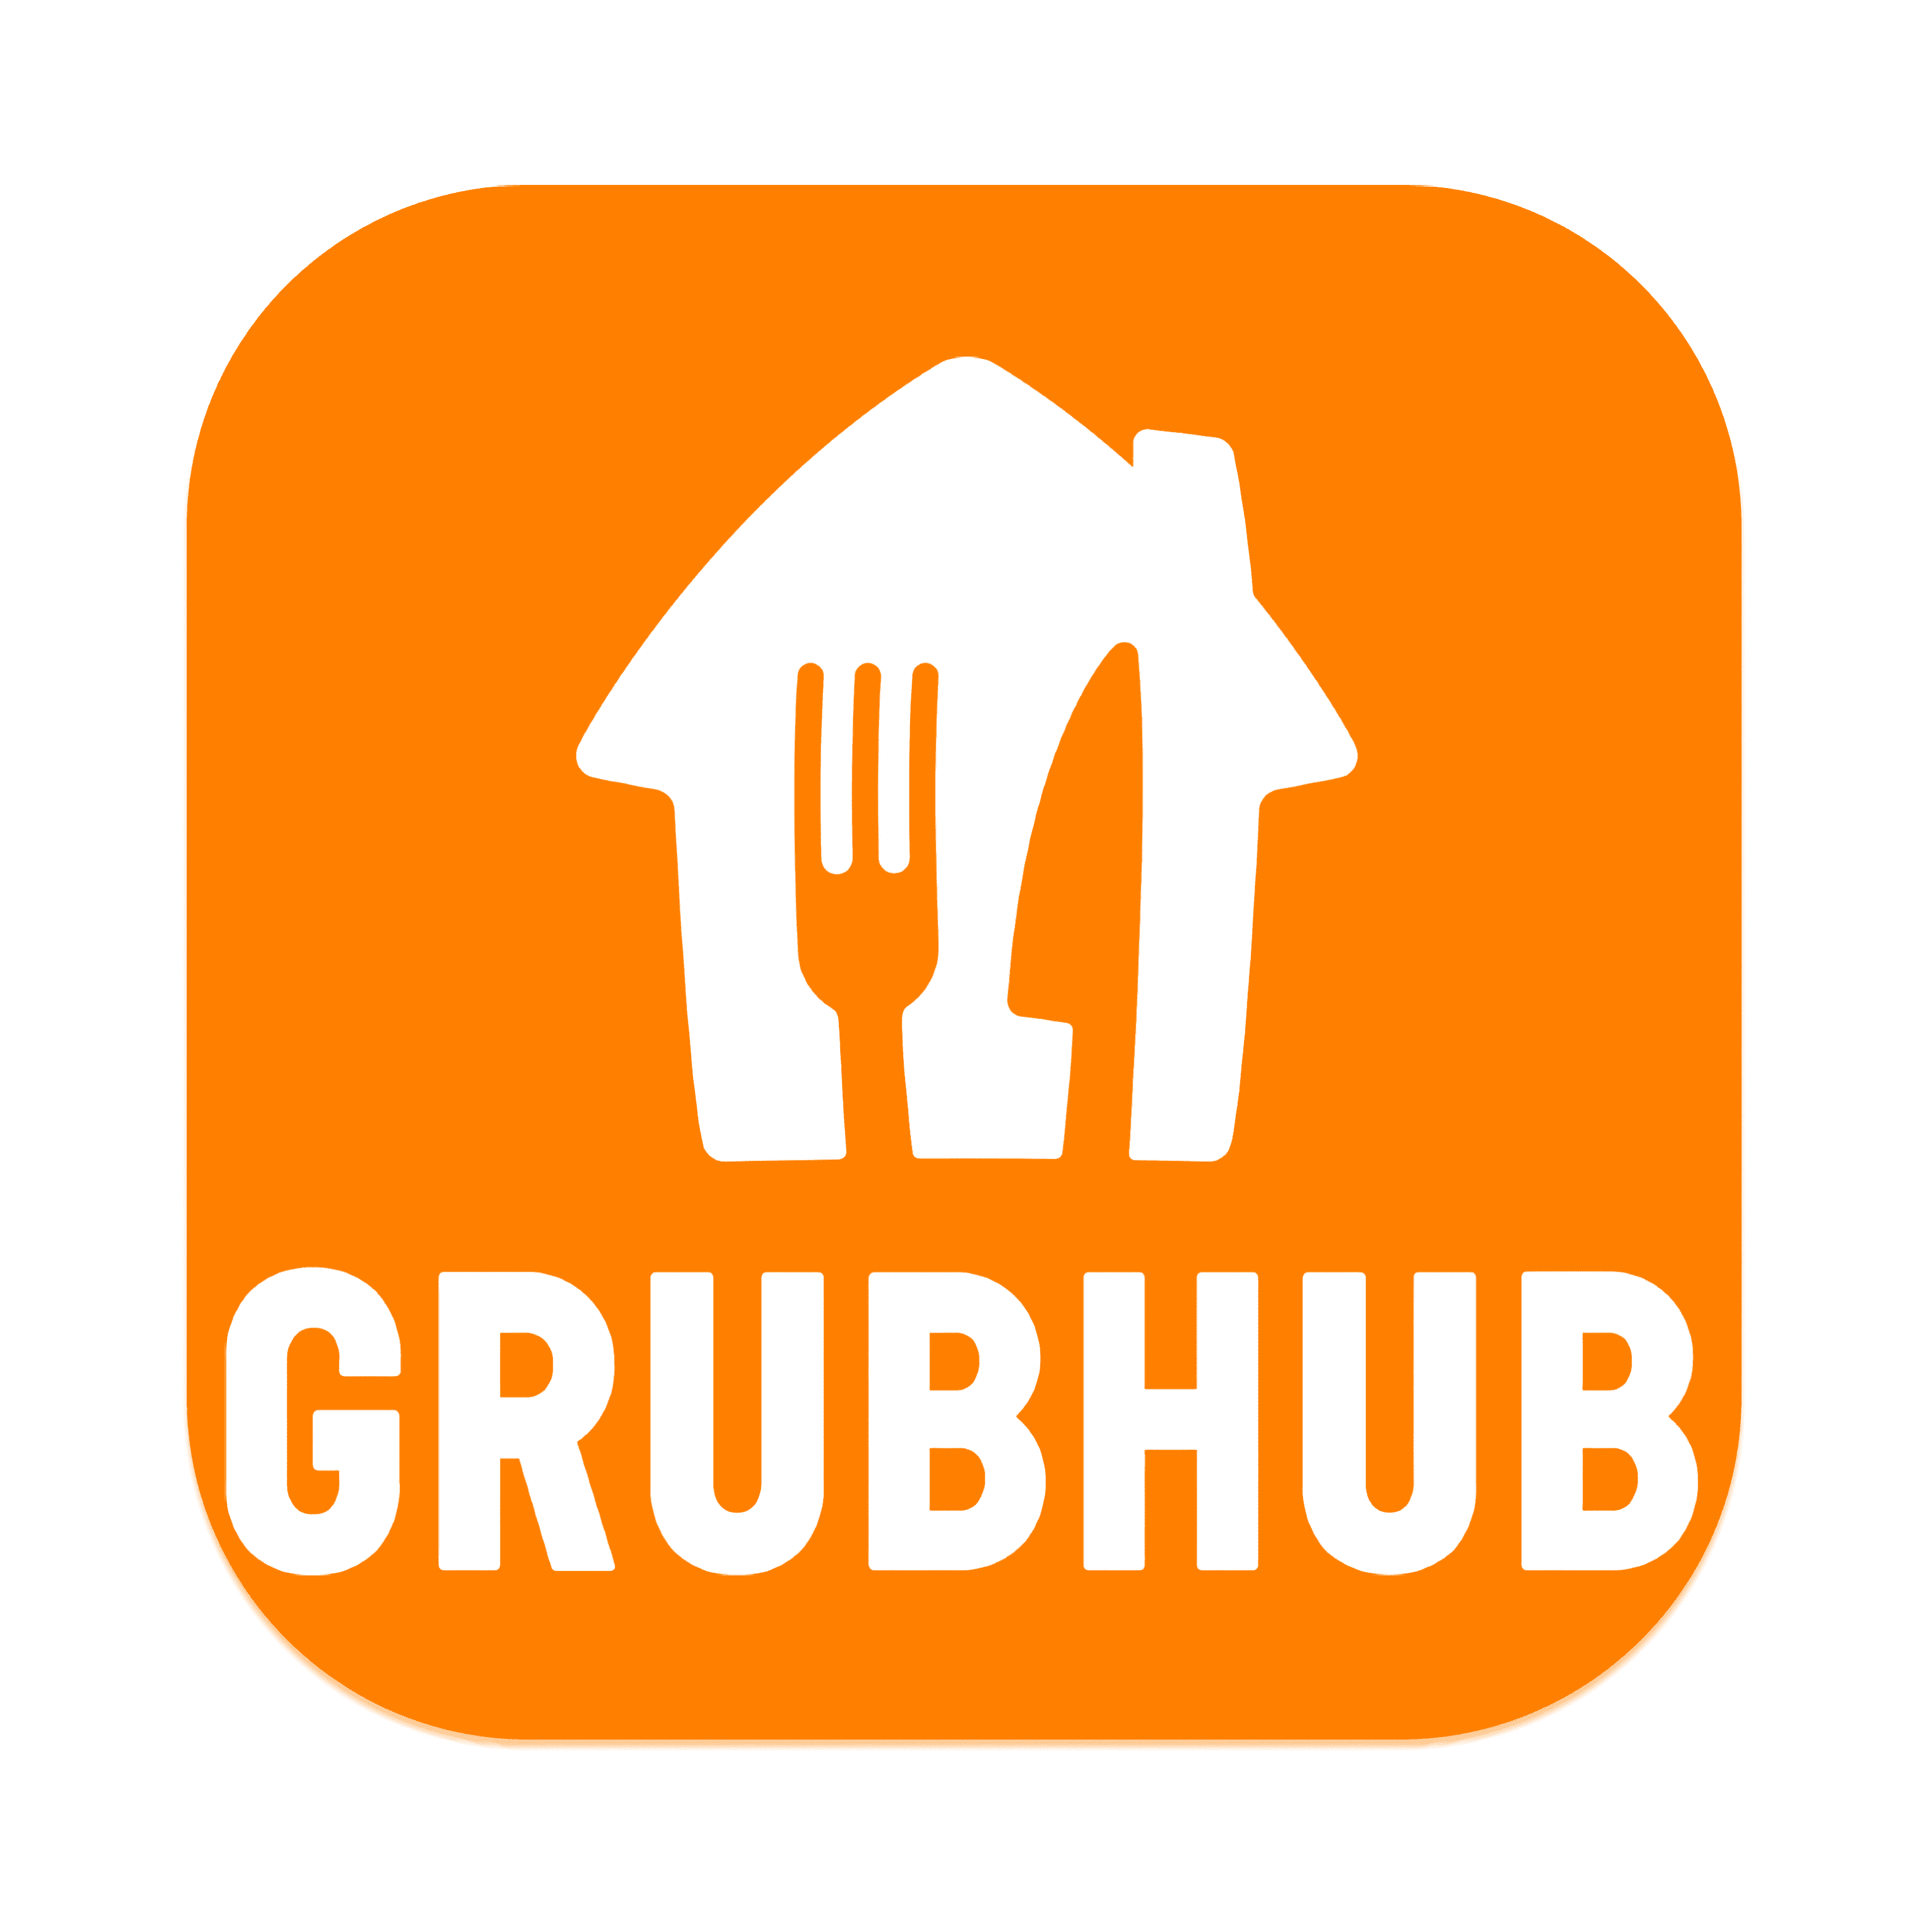 guru restaurant order from grubhub button